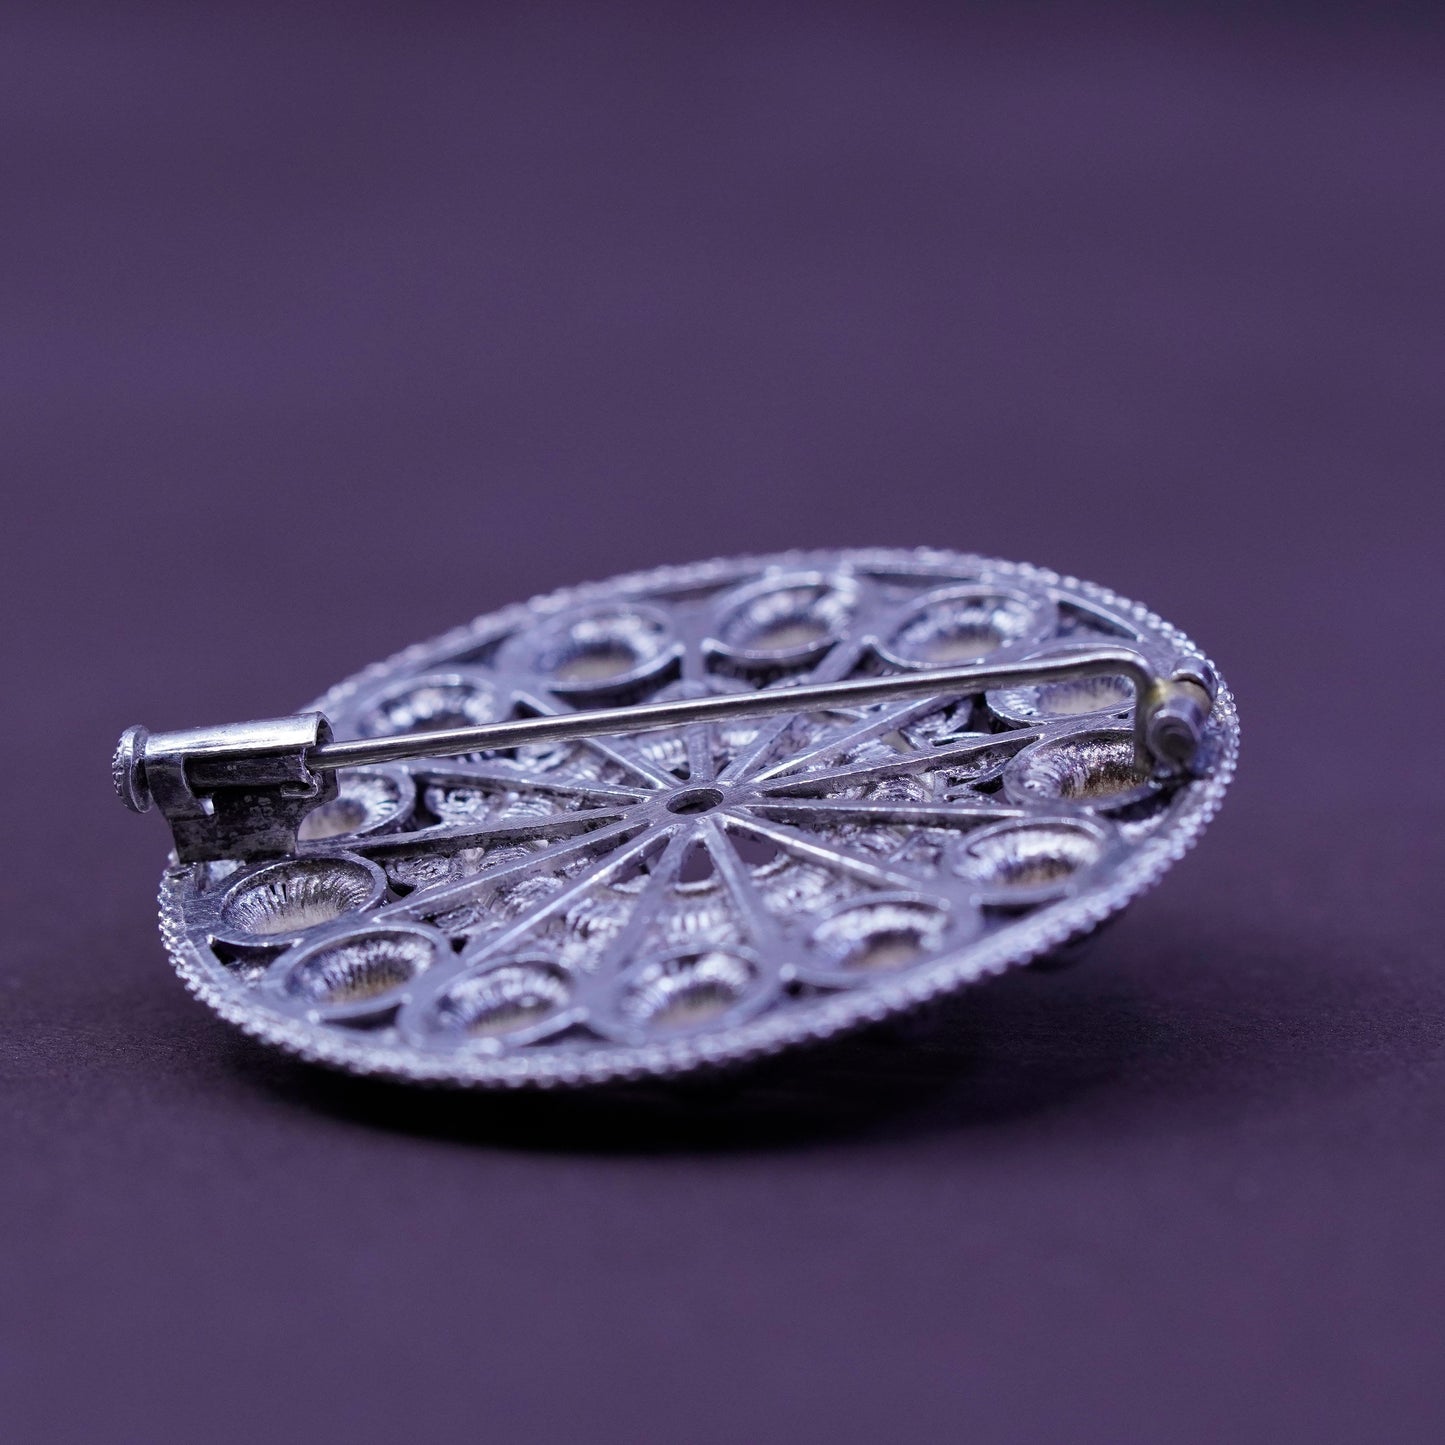 Vintage handmade sterling silver round shaped filigree bead brooch